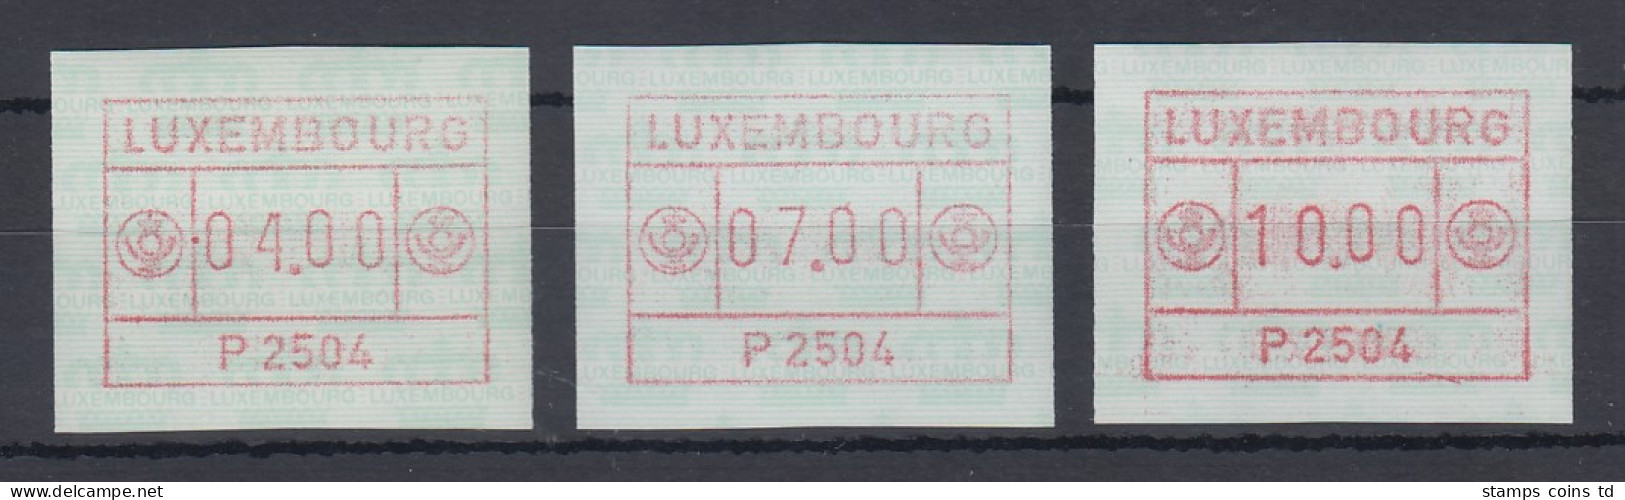 Luxemburg ATM P2504 Tastensatz 4-7-10 ** - Automatenmarken